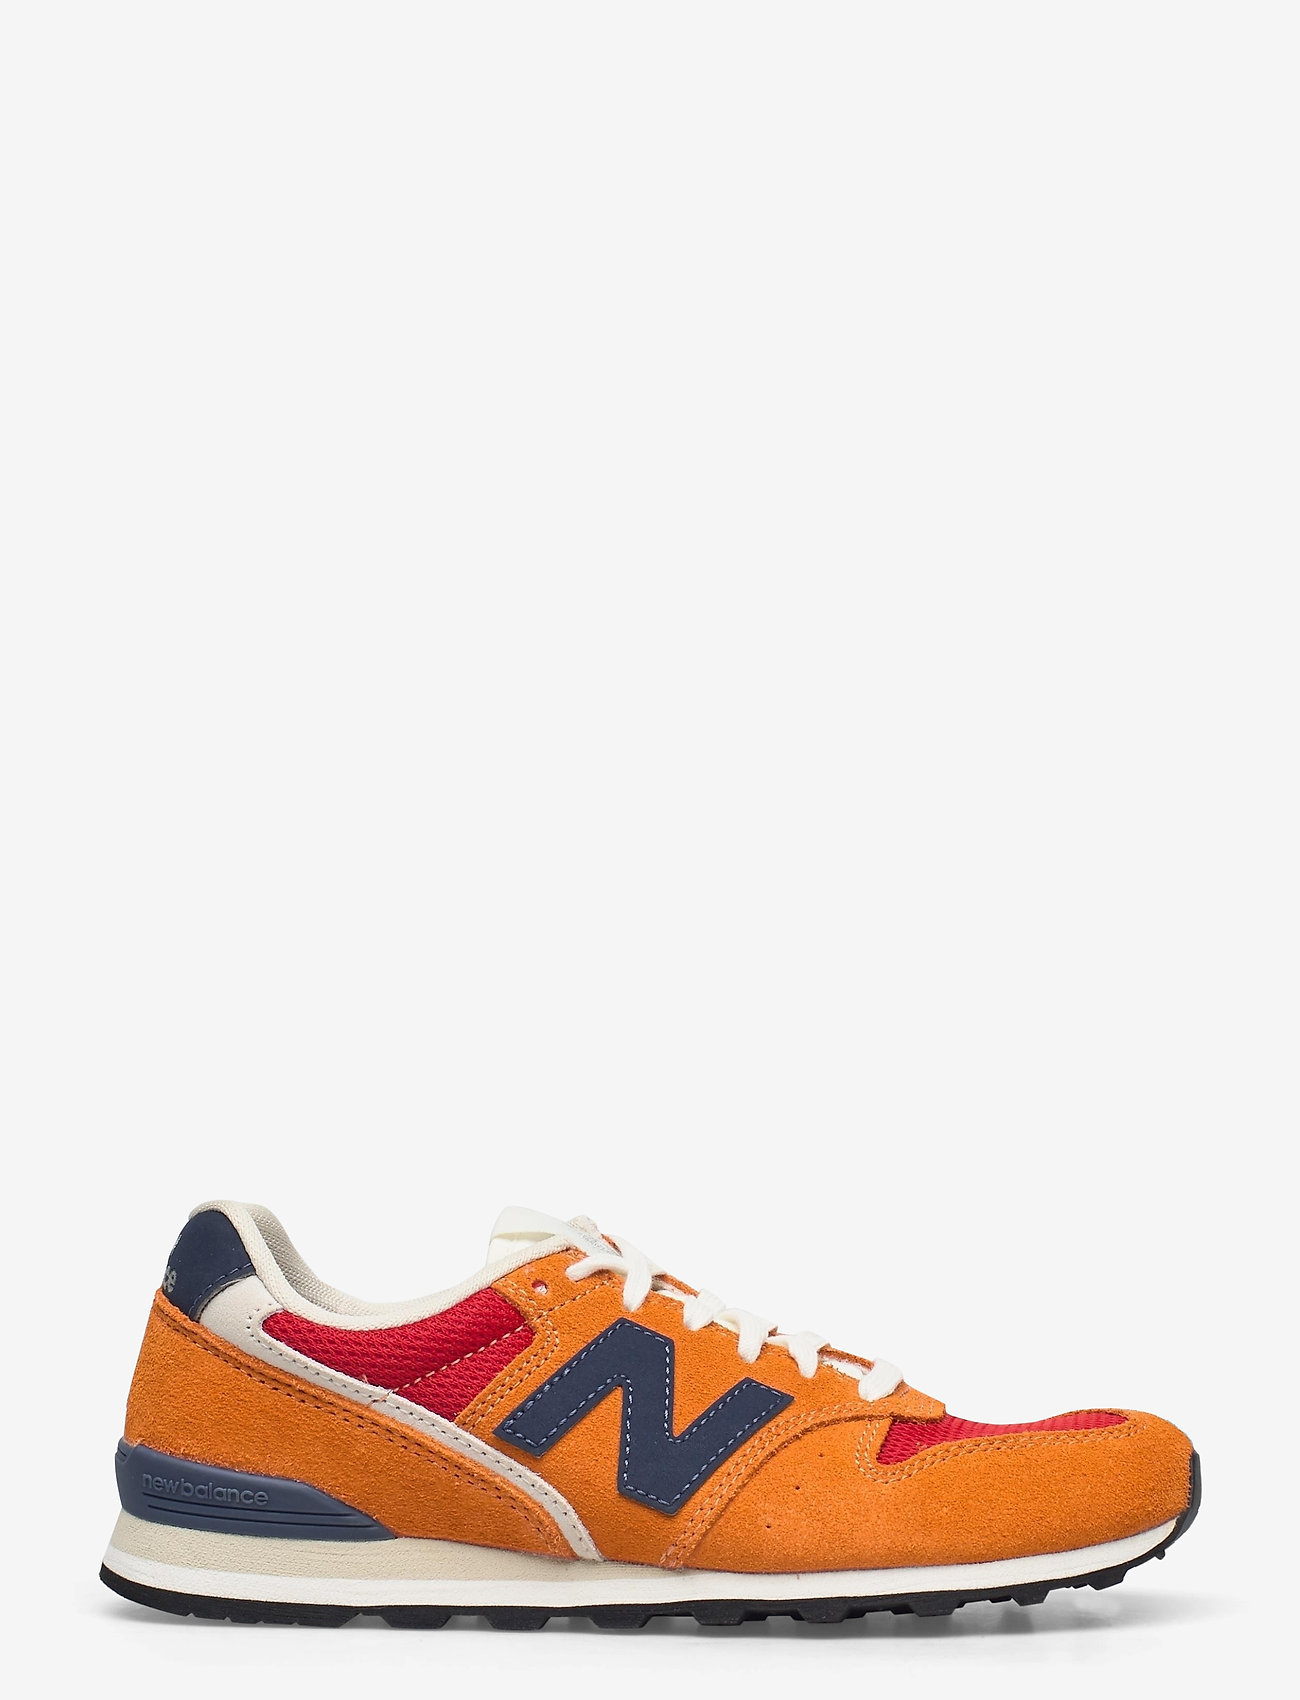 nb 996 orange